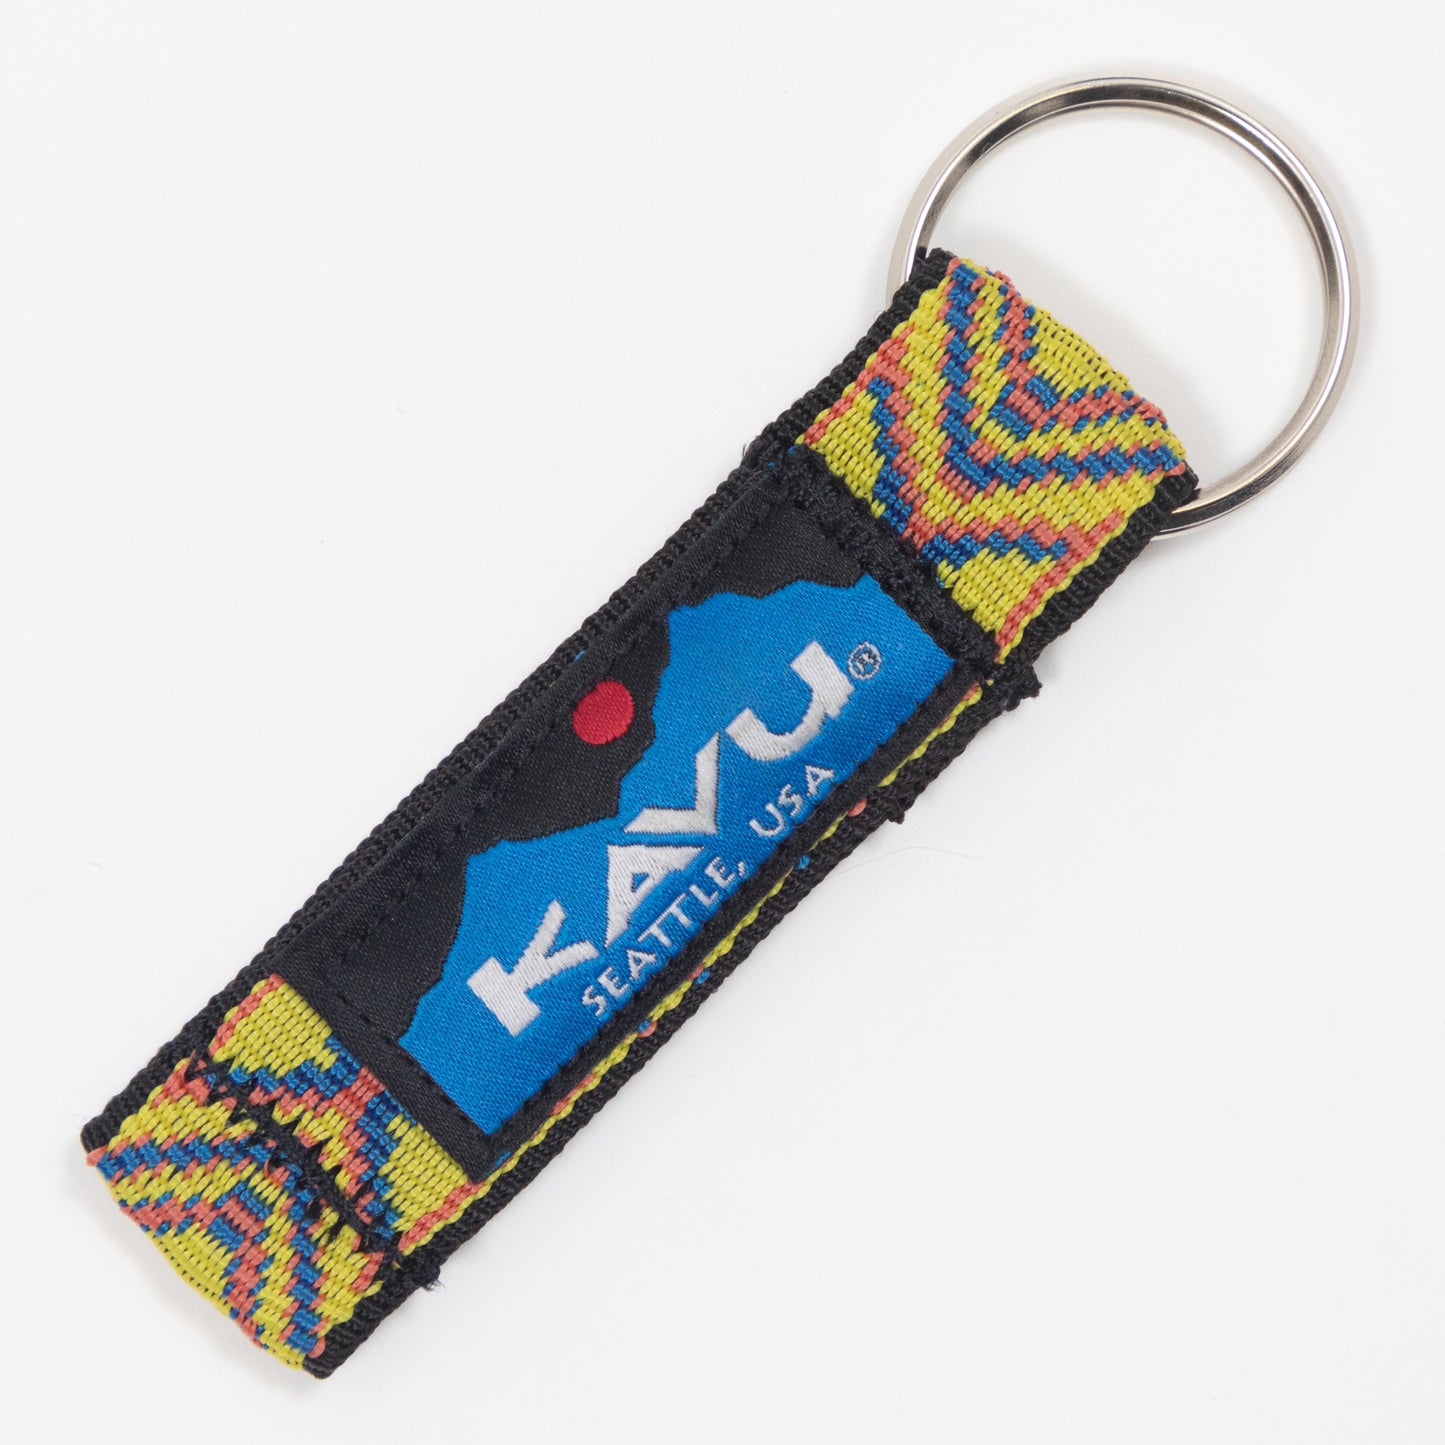 KAVU Key Chain Key Ring in YELLOW